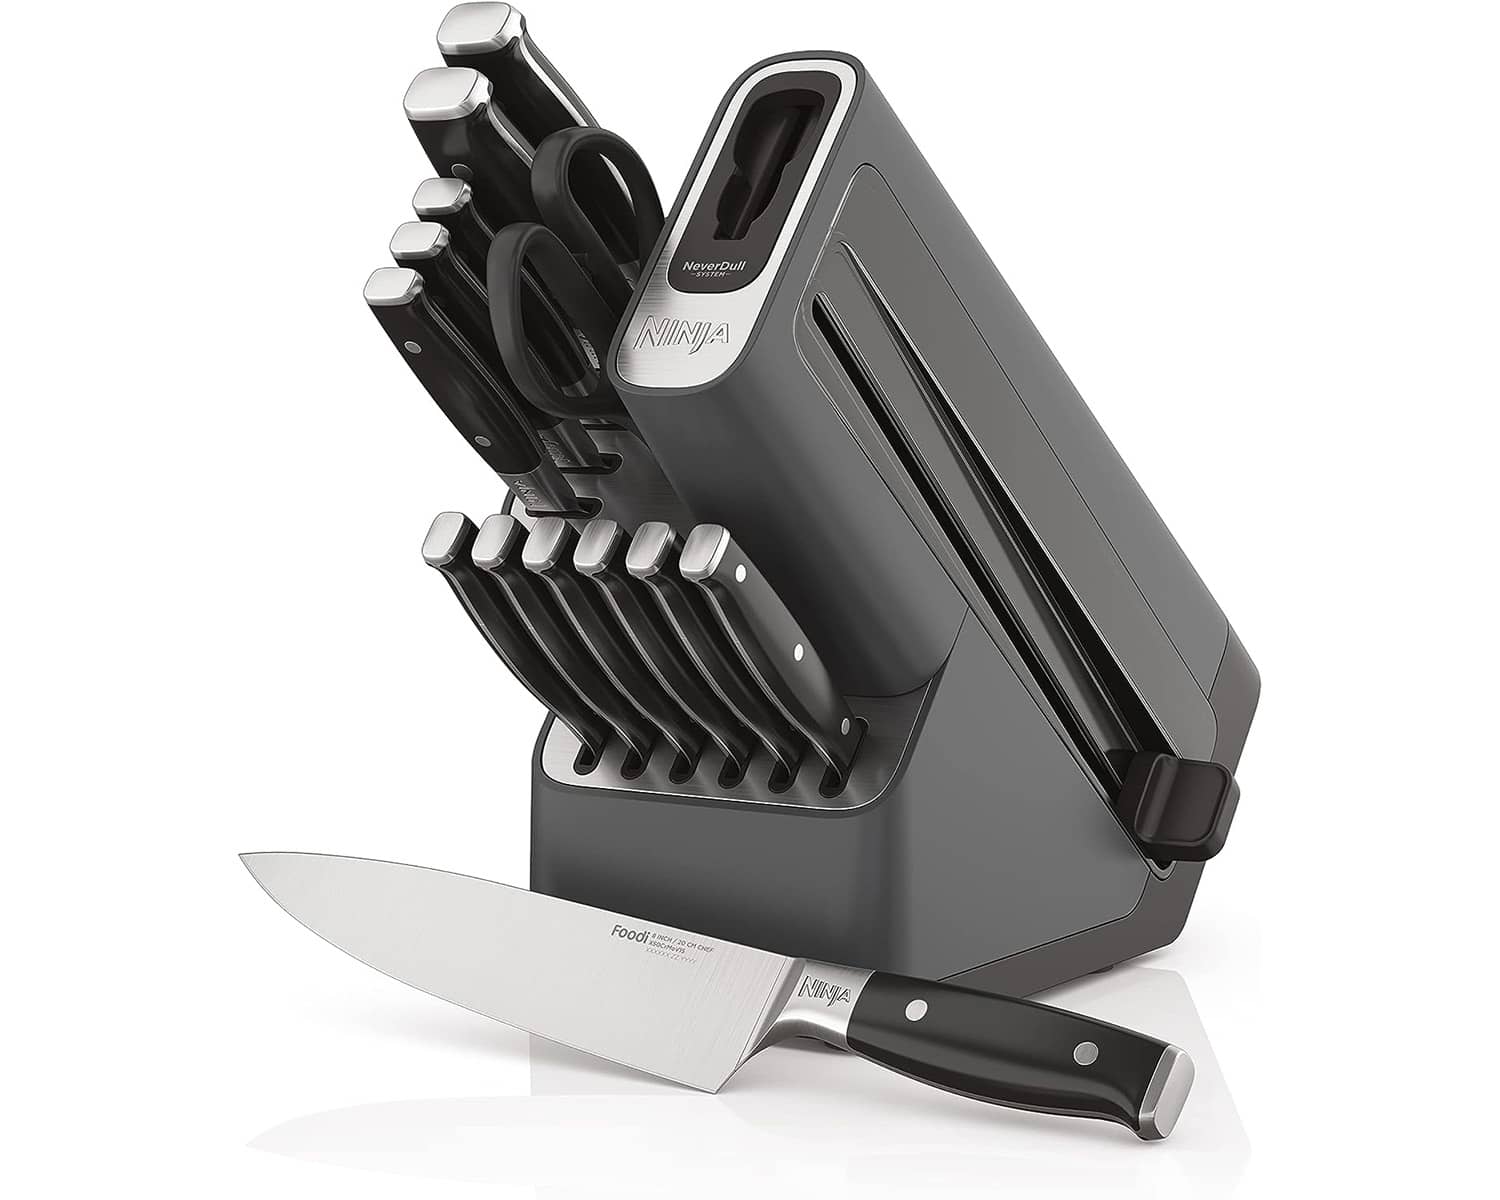 Ninja - 14 Piece Knife Block Set with Built-in Sharpener, German Stainless Steel Knives